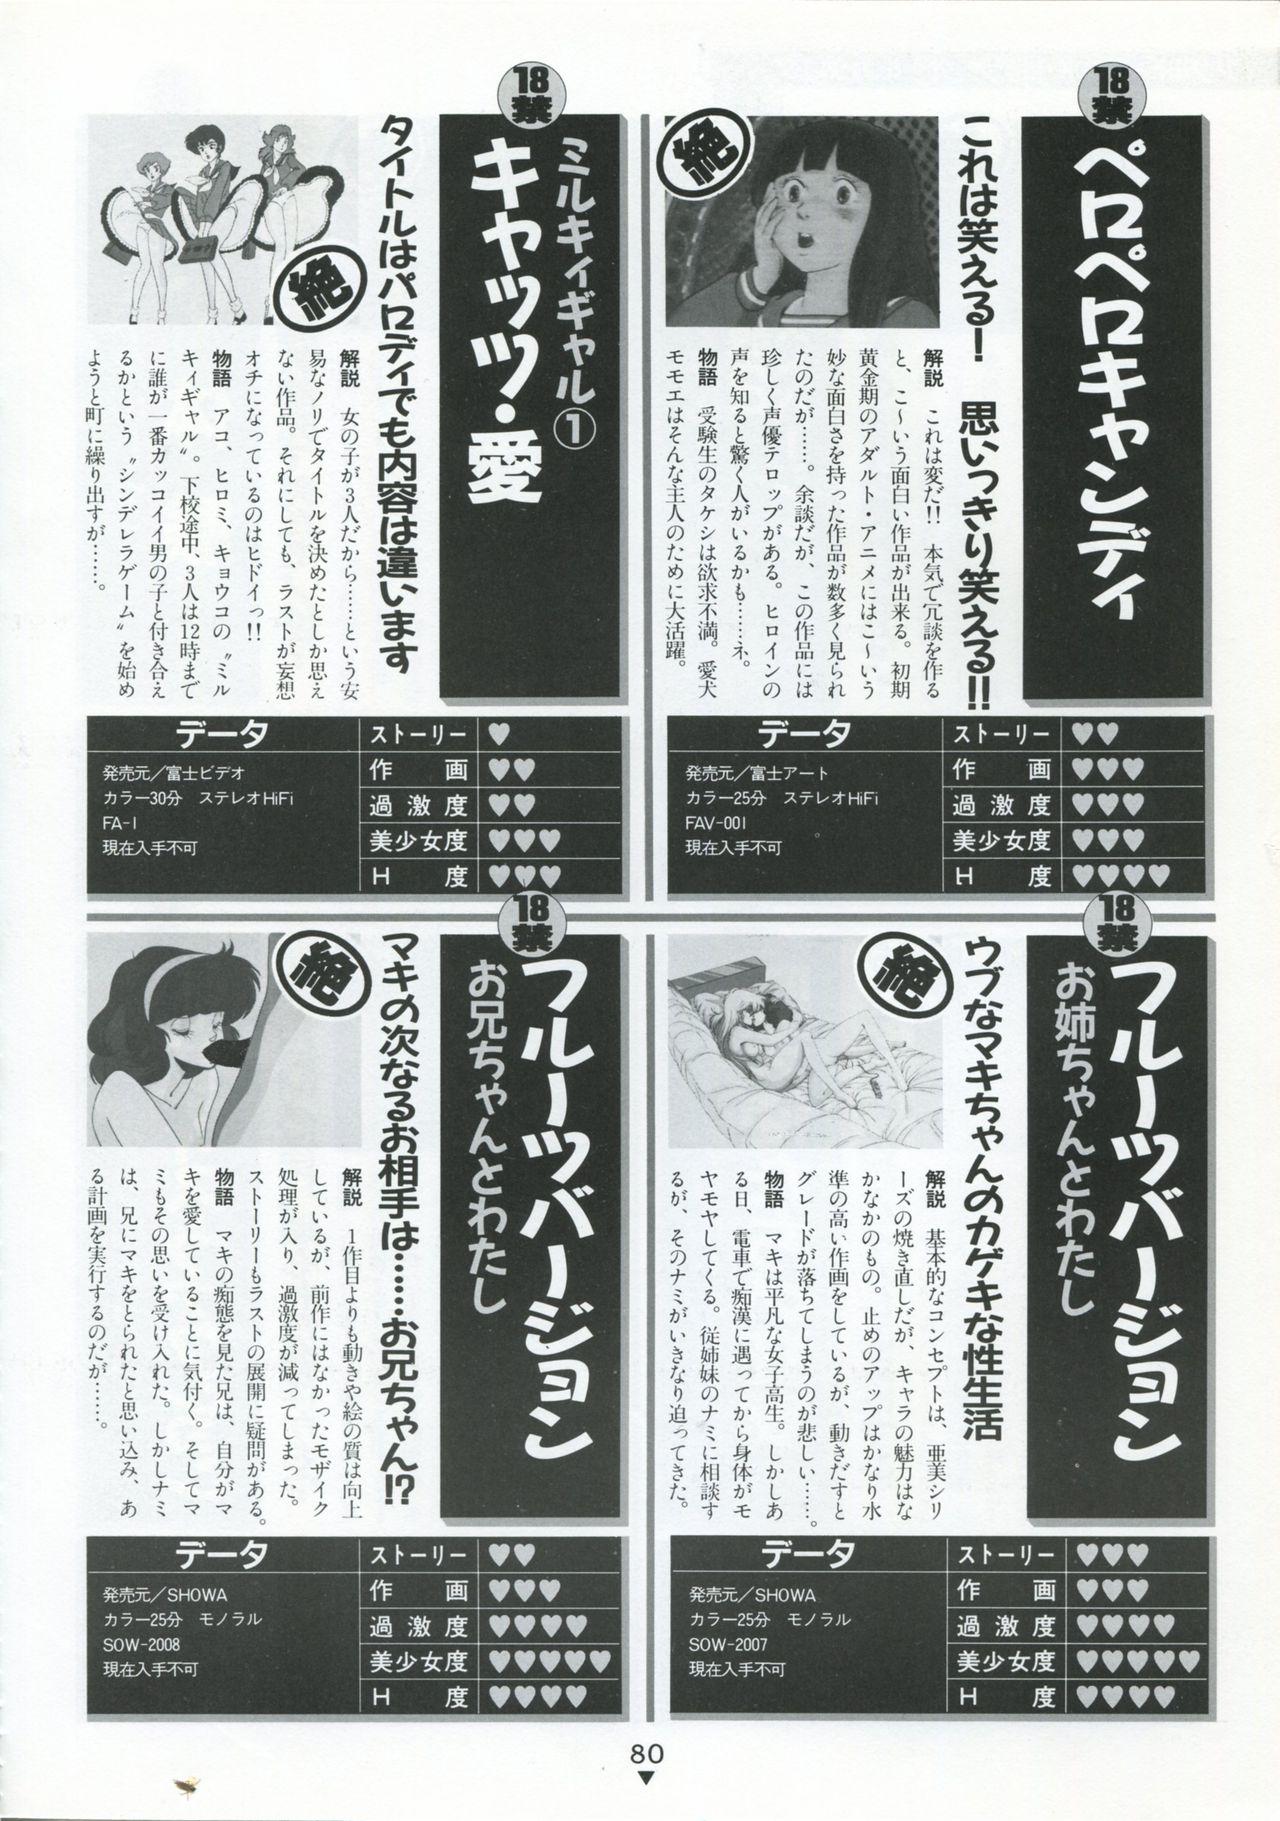 Bishoujo Anime Daizenshuu - Adult Animation Video Catalog 1991 75